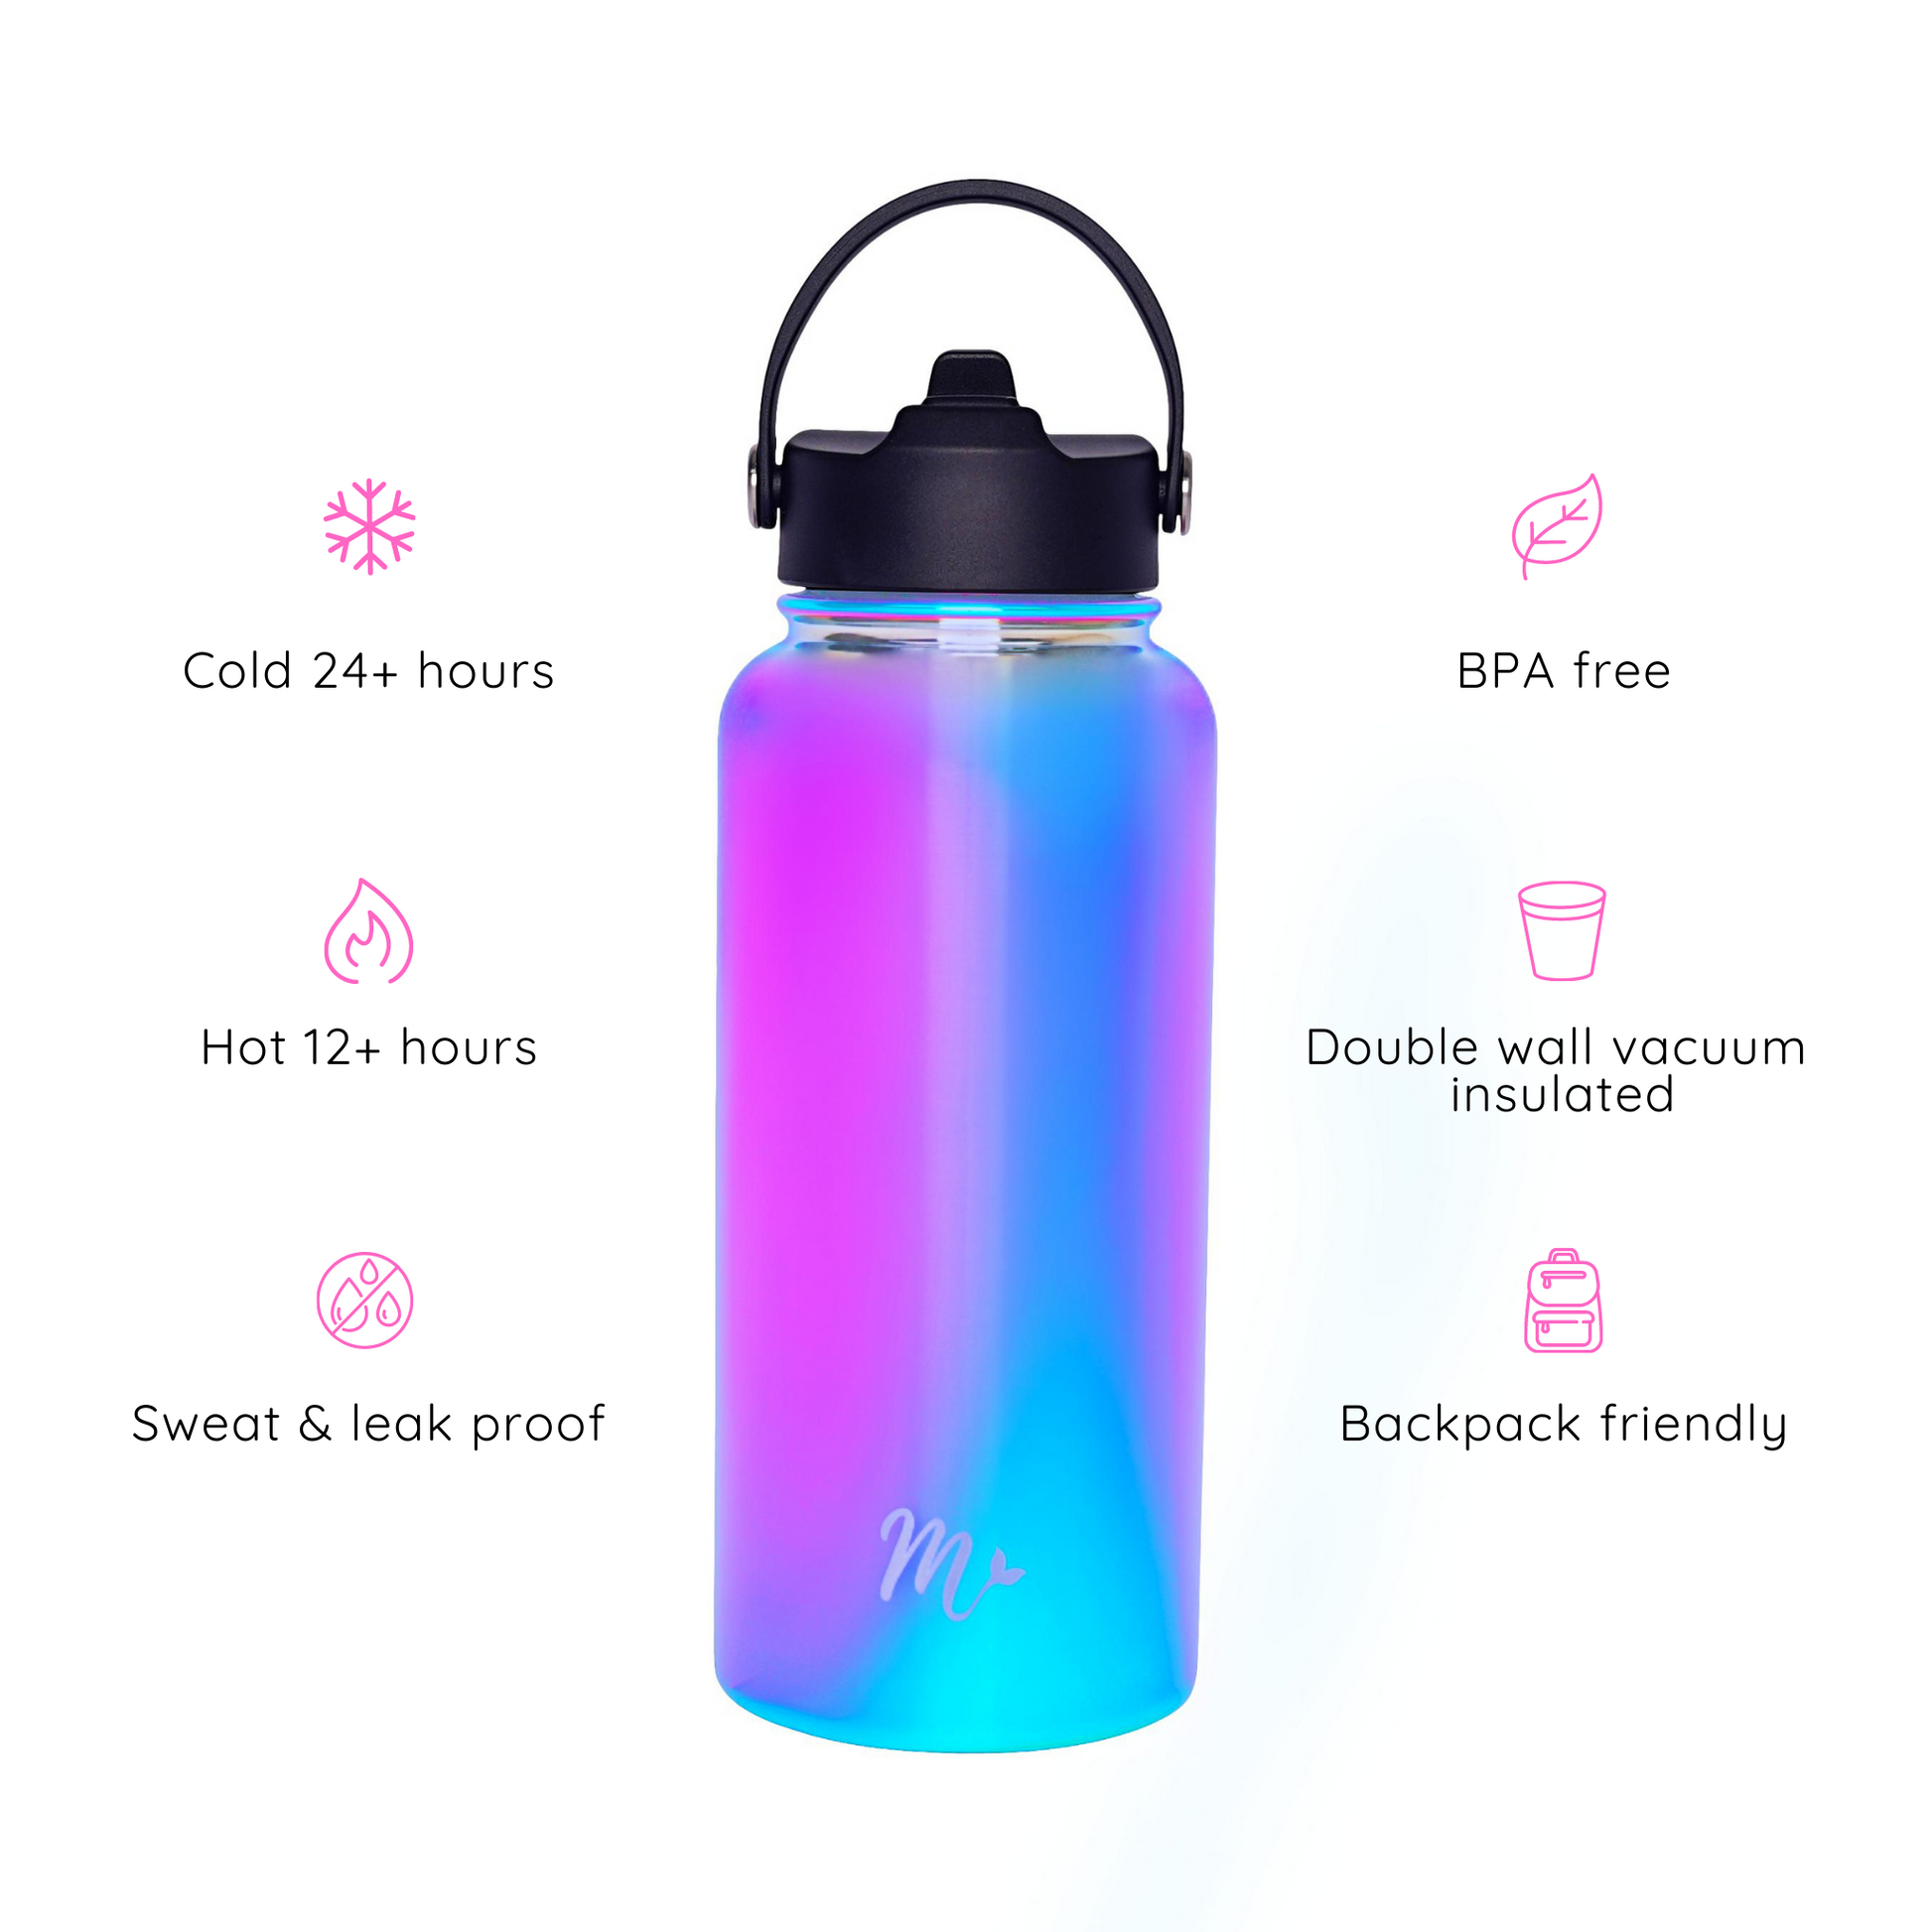 chrome water bottle, iridescent water bottle, water flask, travel bottle, keeps drinks cold, aesthetic water bottle, straw bottle